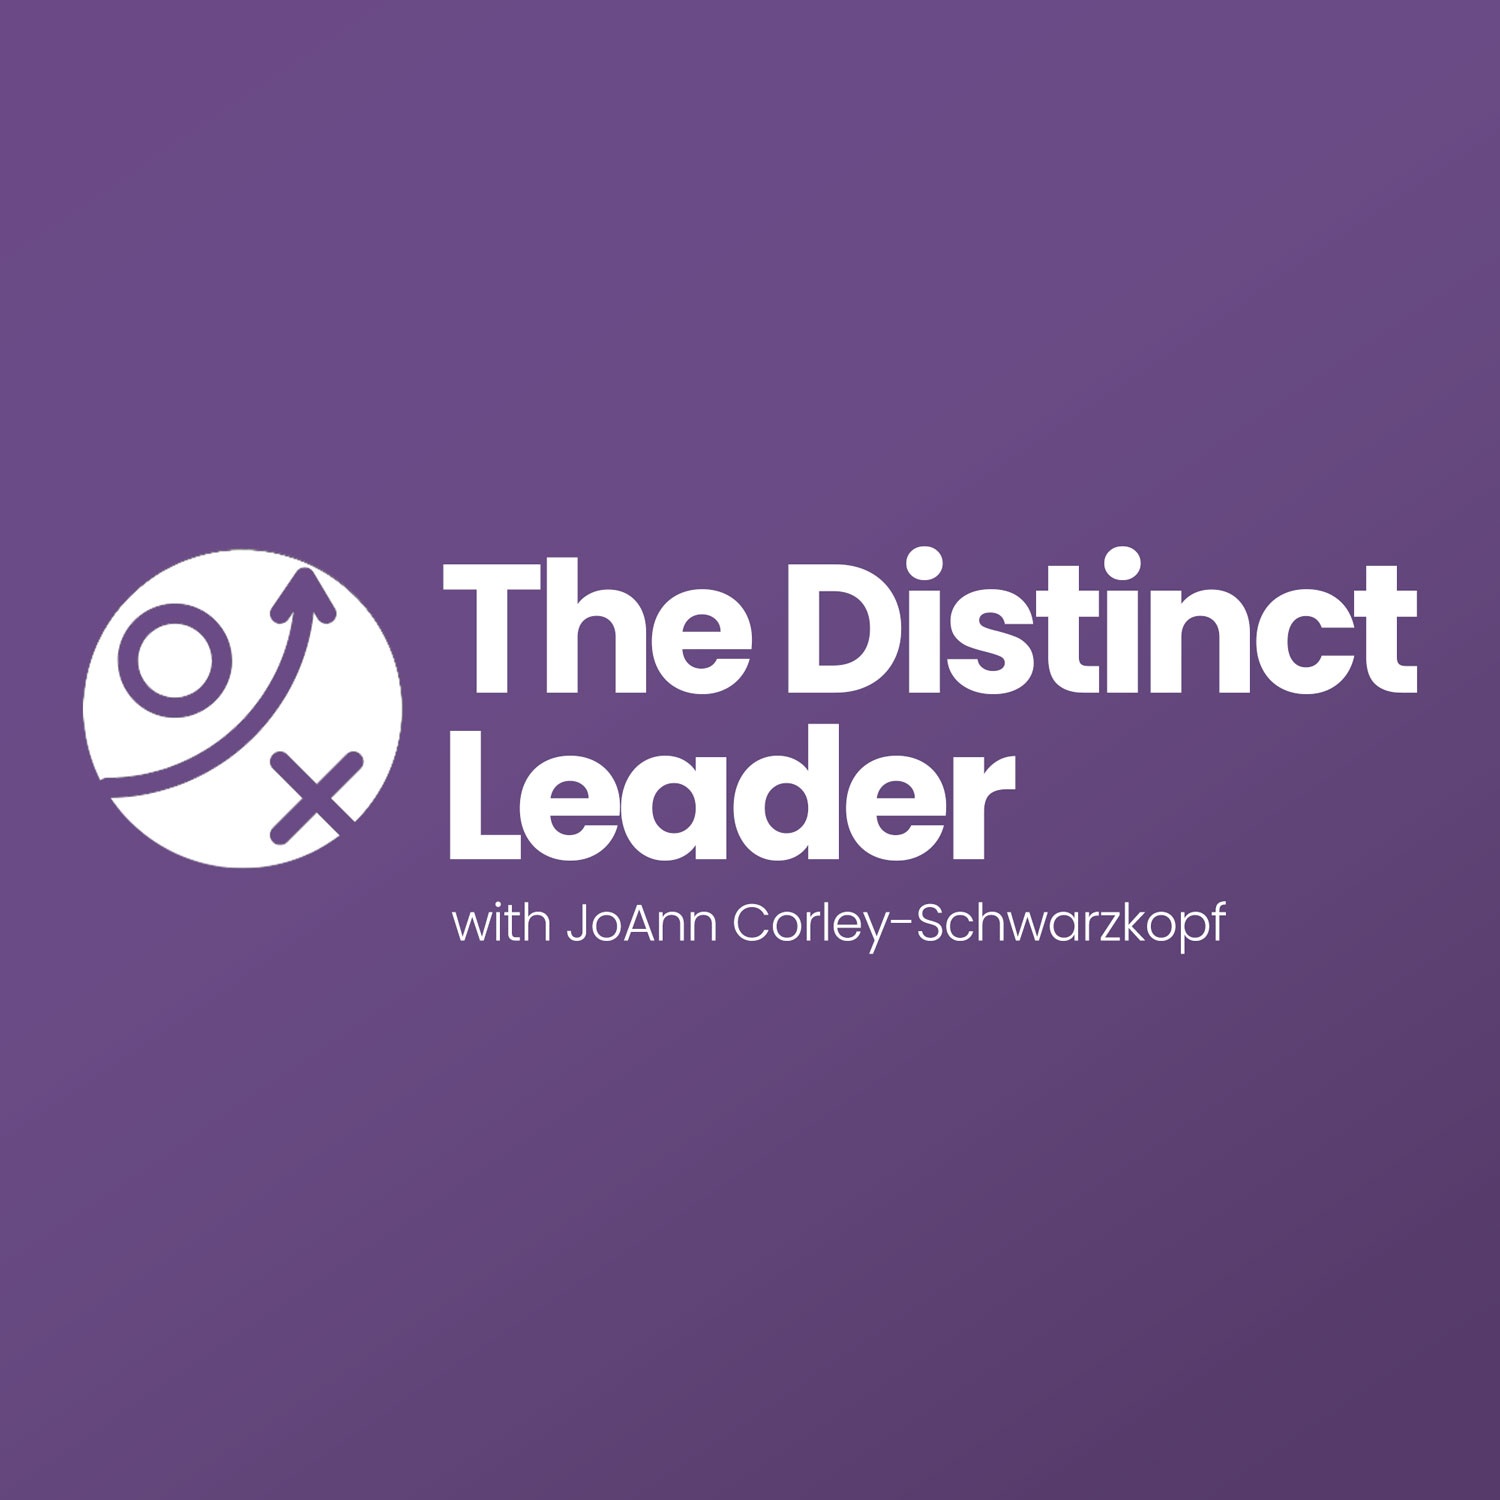 The Distinct Leader